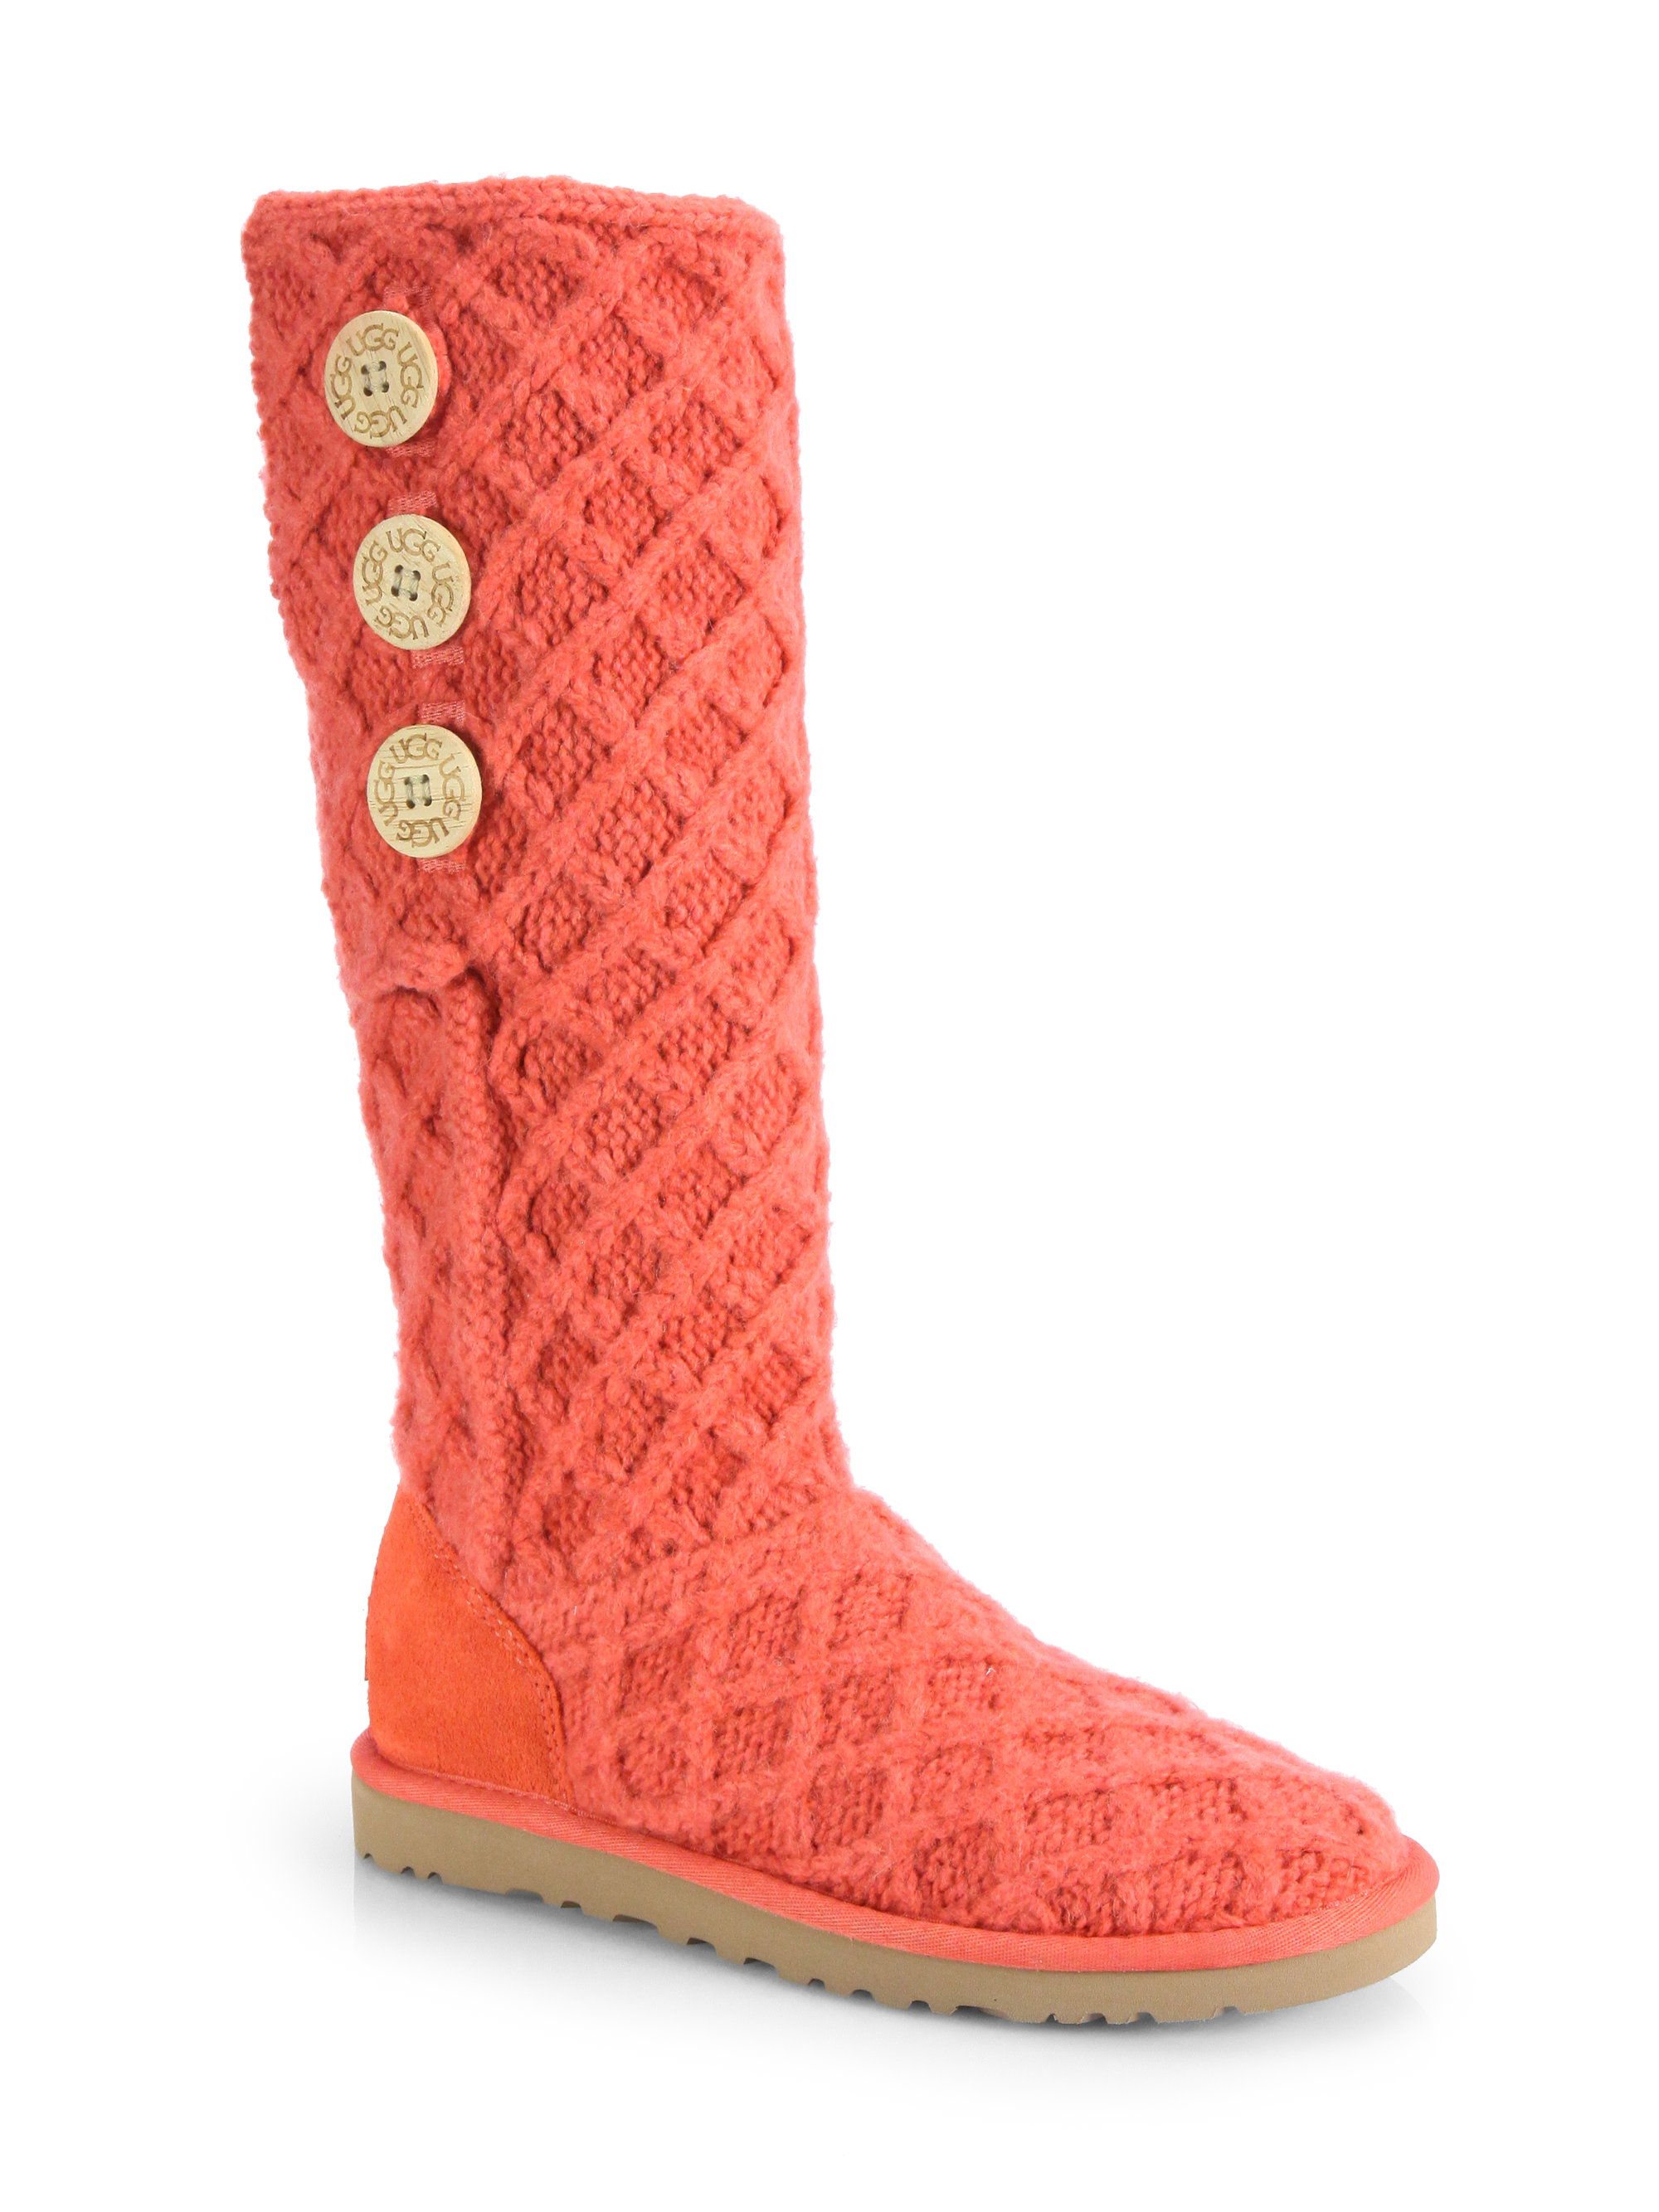 UGG Lattice Cardy Knit Boots in Orange - Lyst